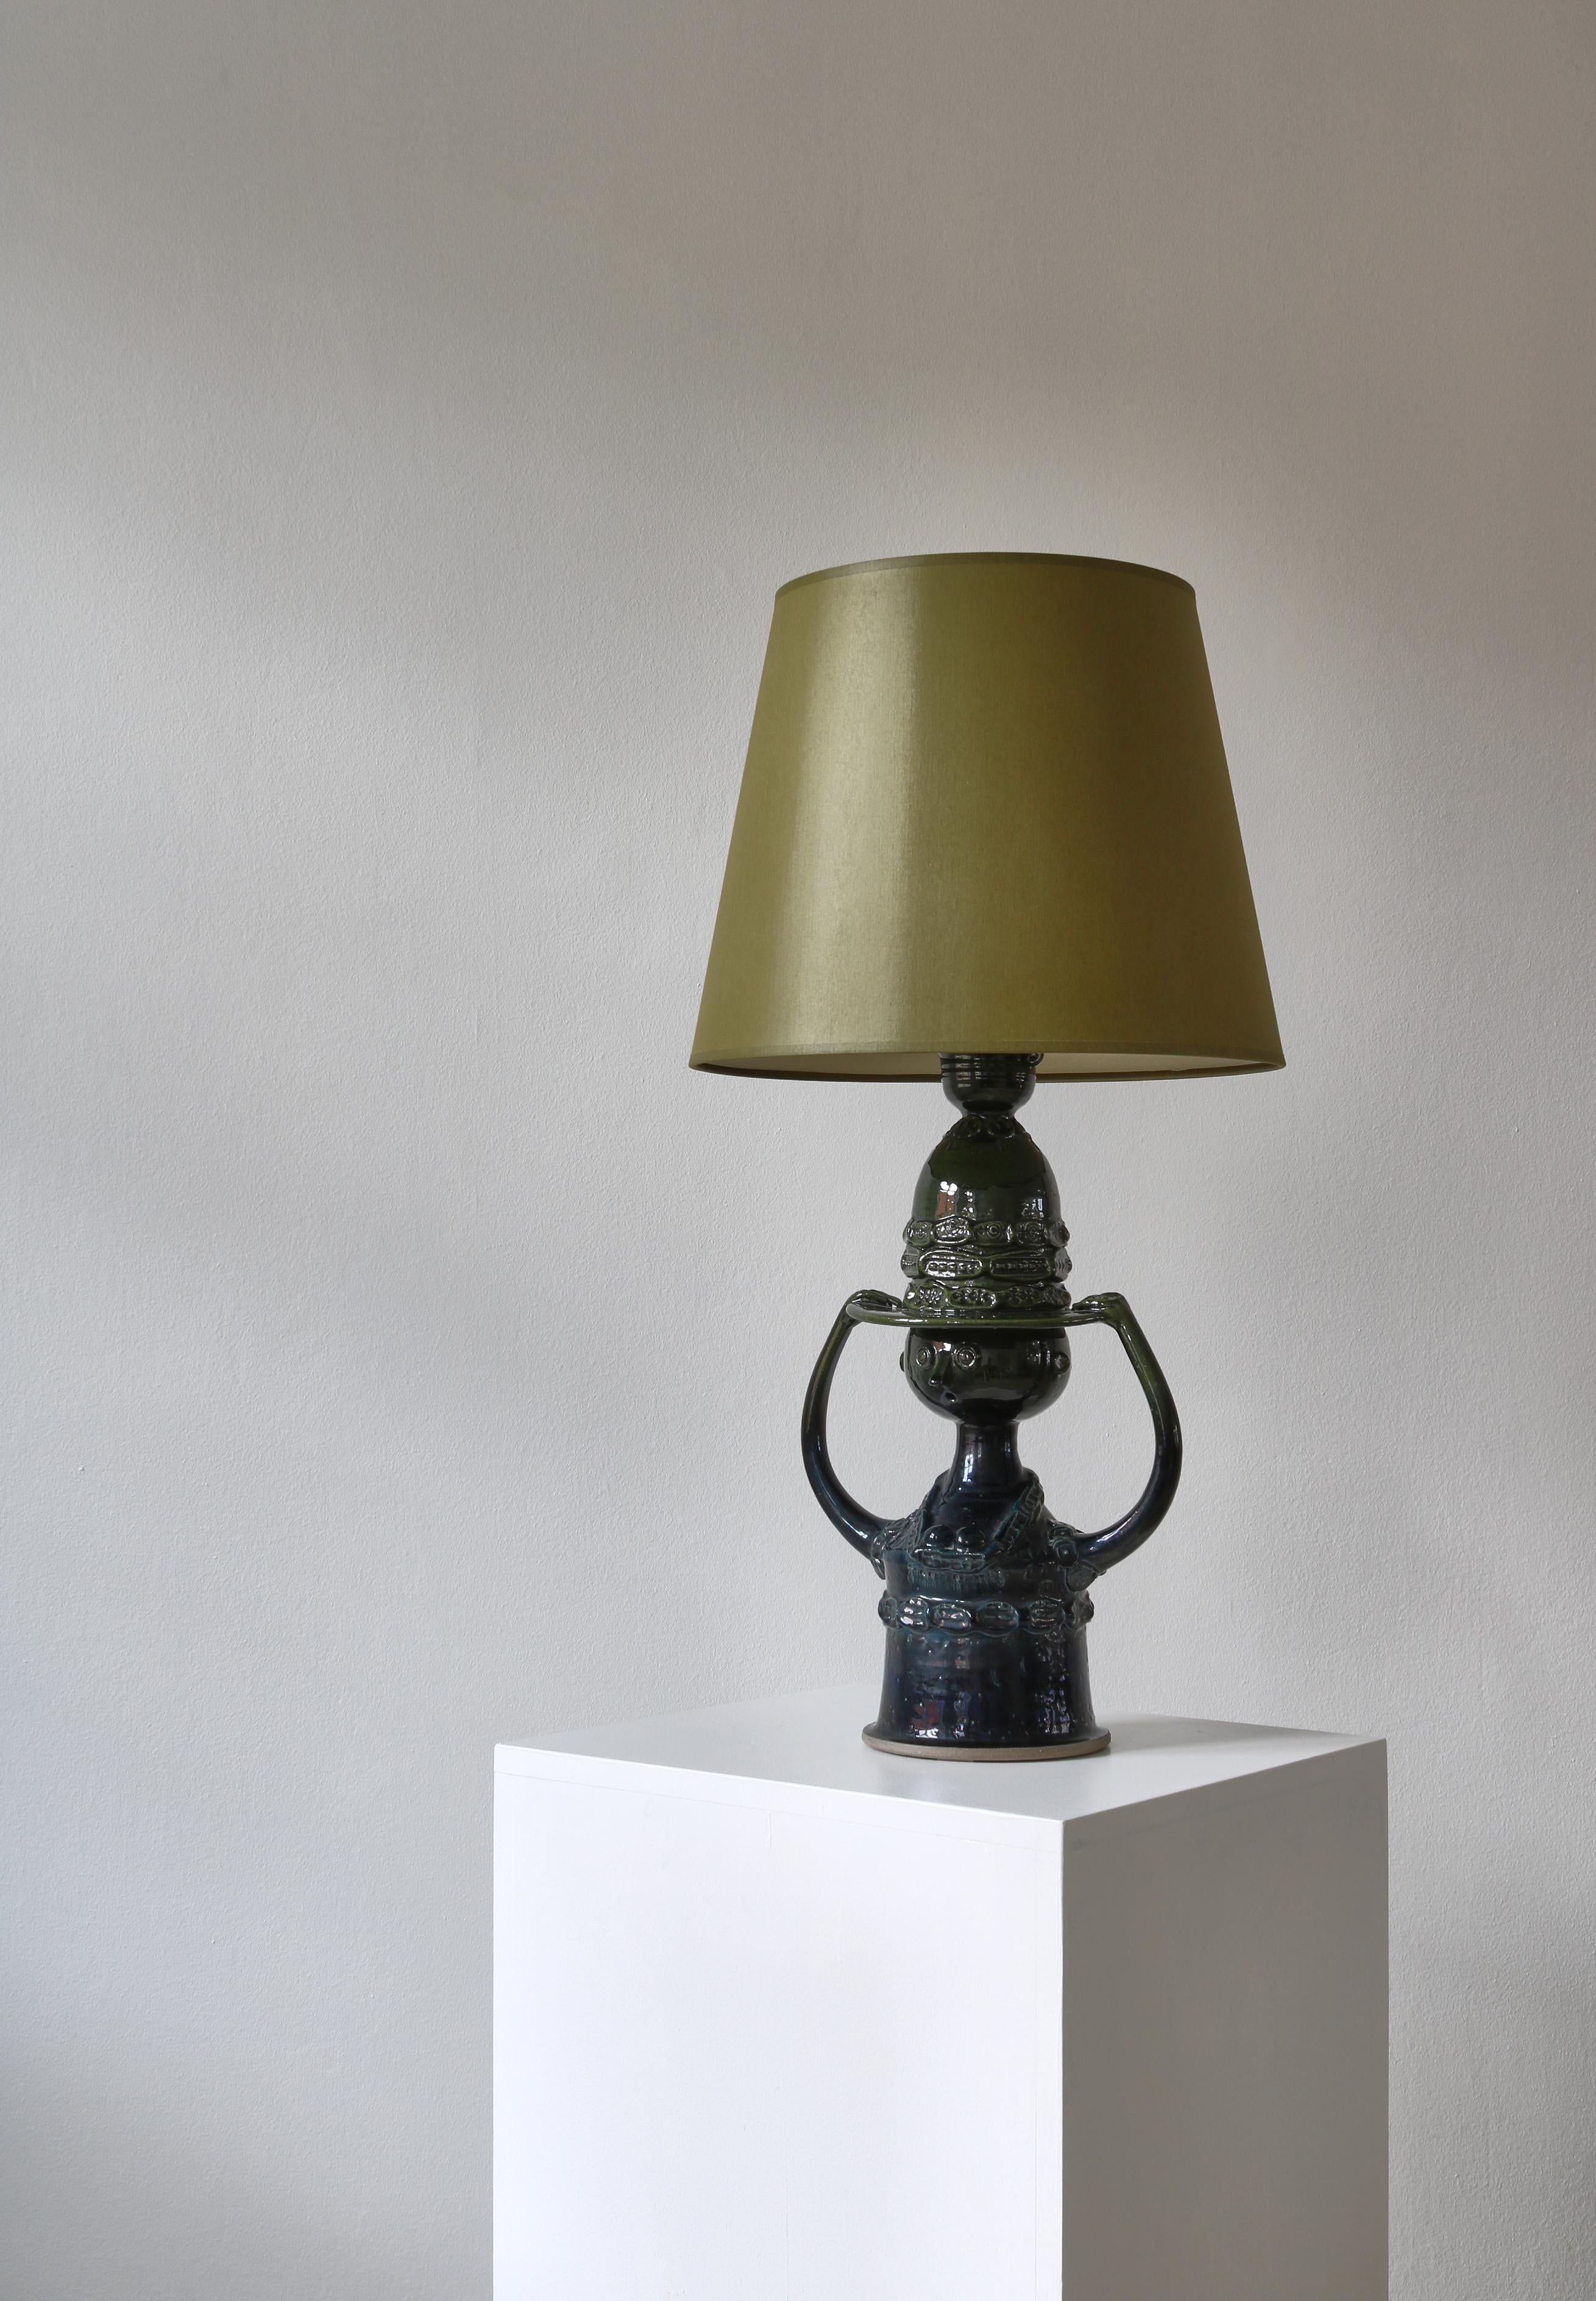 Wonderful unique stoneware table lamp handmade by Bjørn Wiinblad at his own studio 